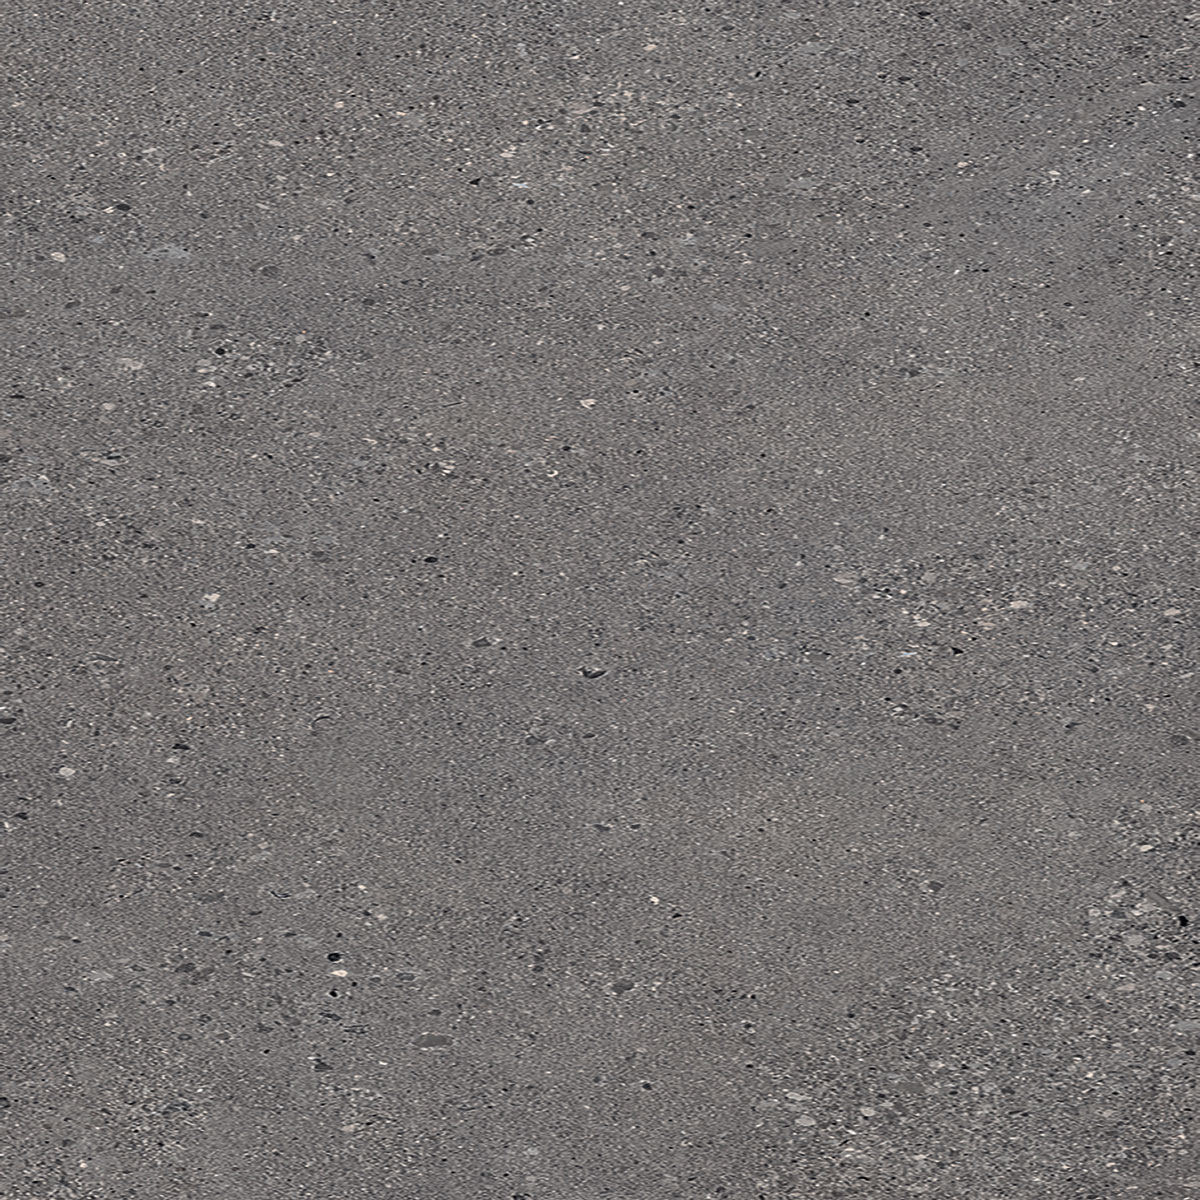 Cement Stone Rough Grain Dark Sample